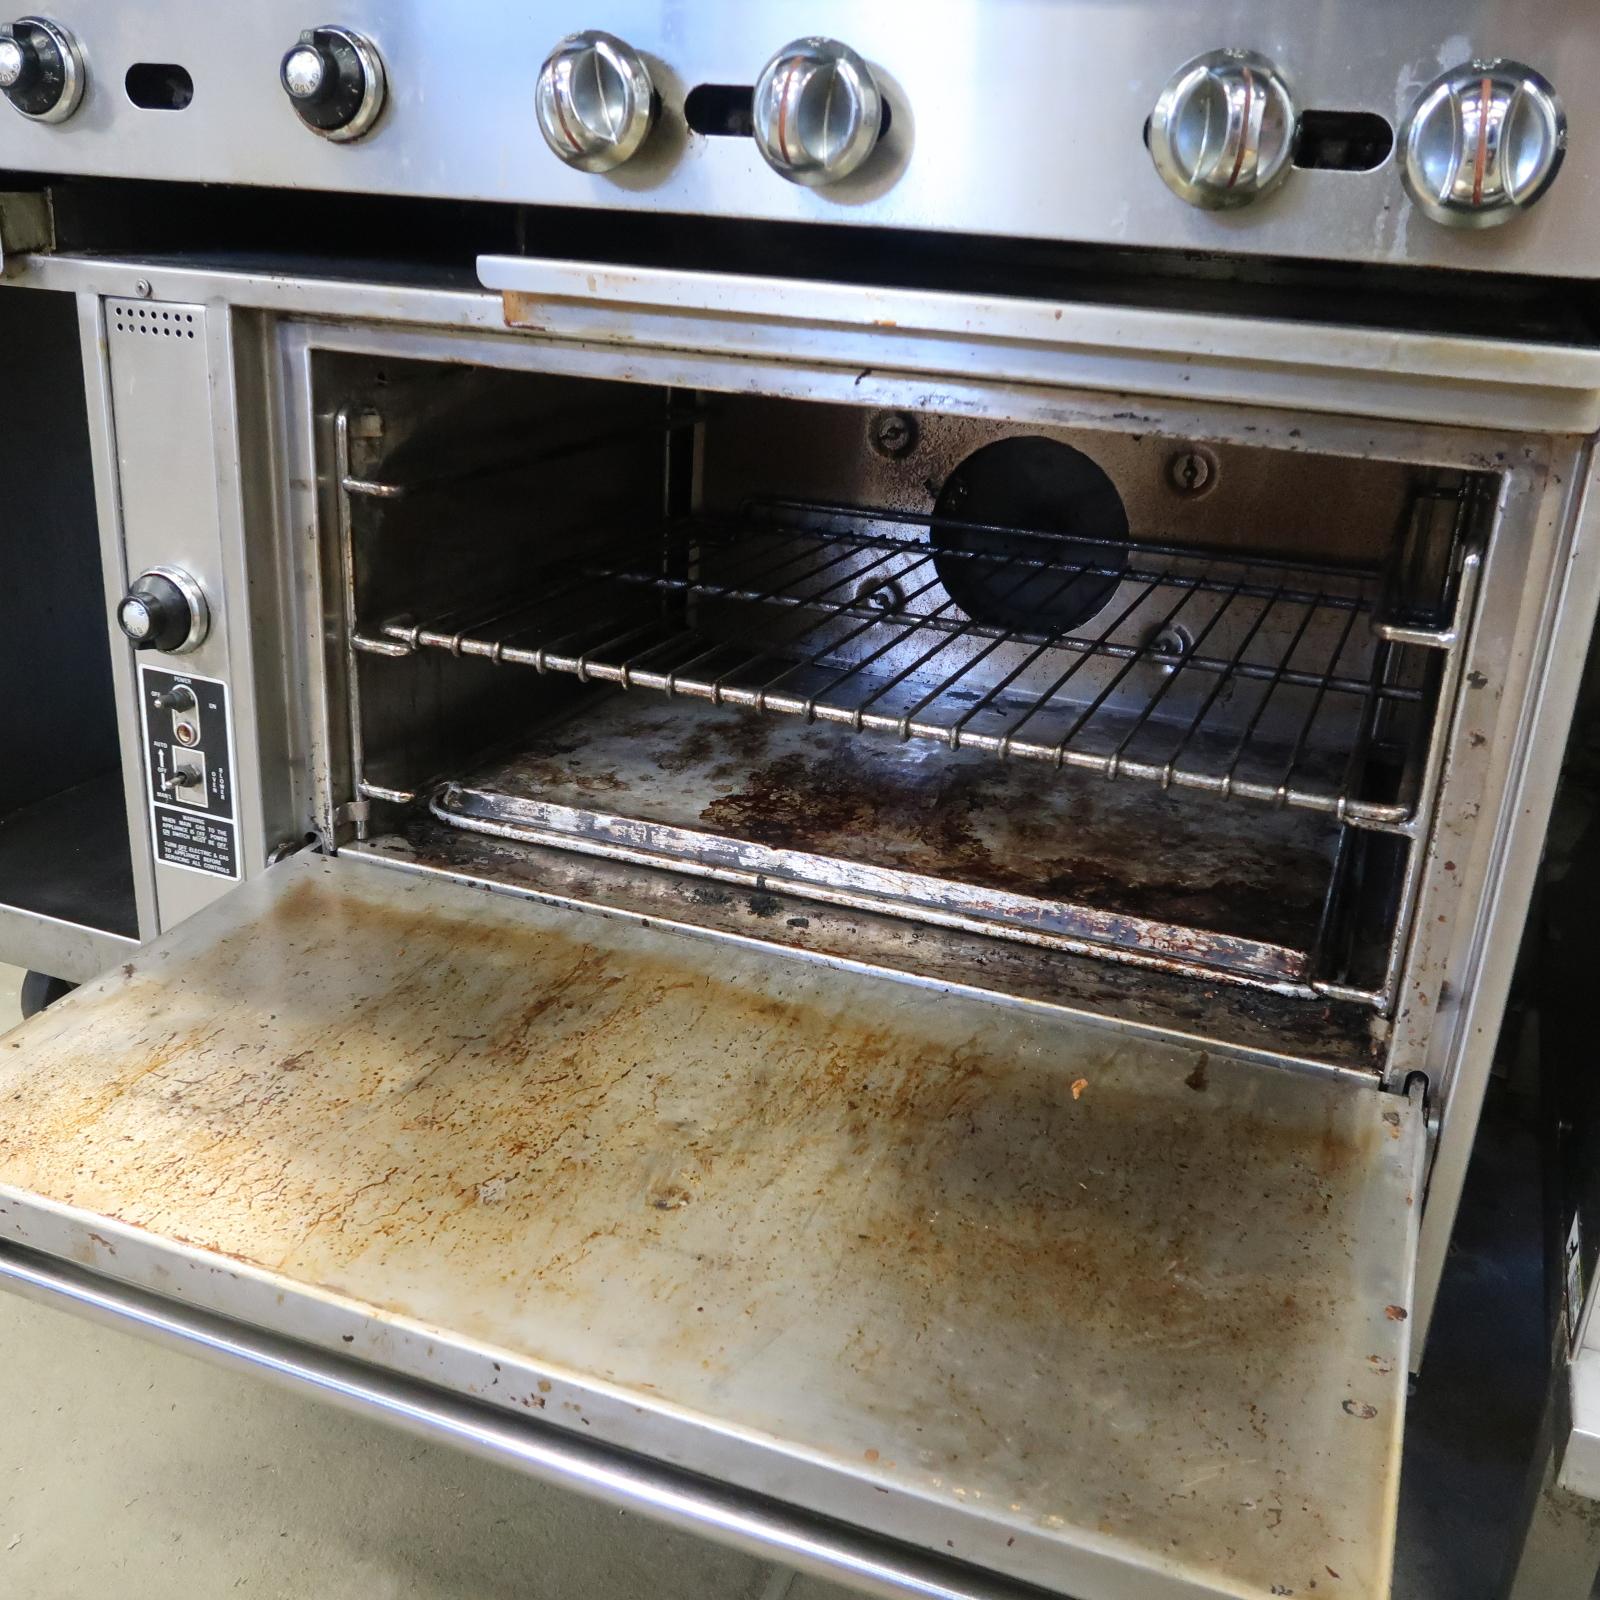 4-burner stove w/ griddle & convection oven